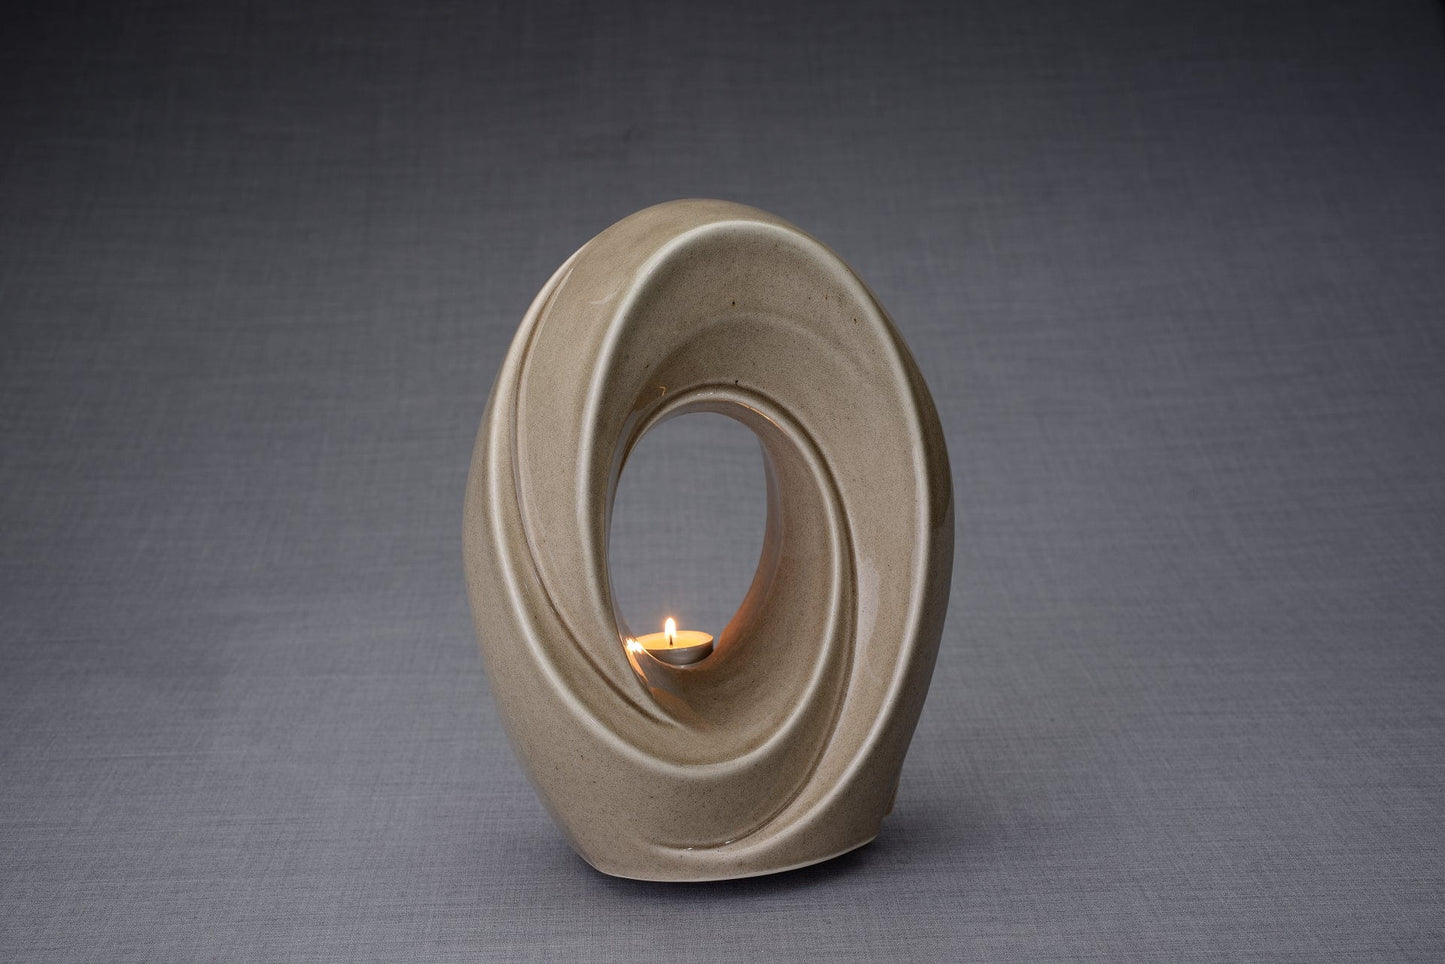 Pulvis Art Urns Adult Size Urn Handmade Cremation Urn for Ashes "The Passage" - Large | Beige Grey | Ceramic